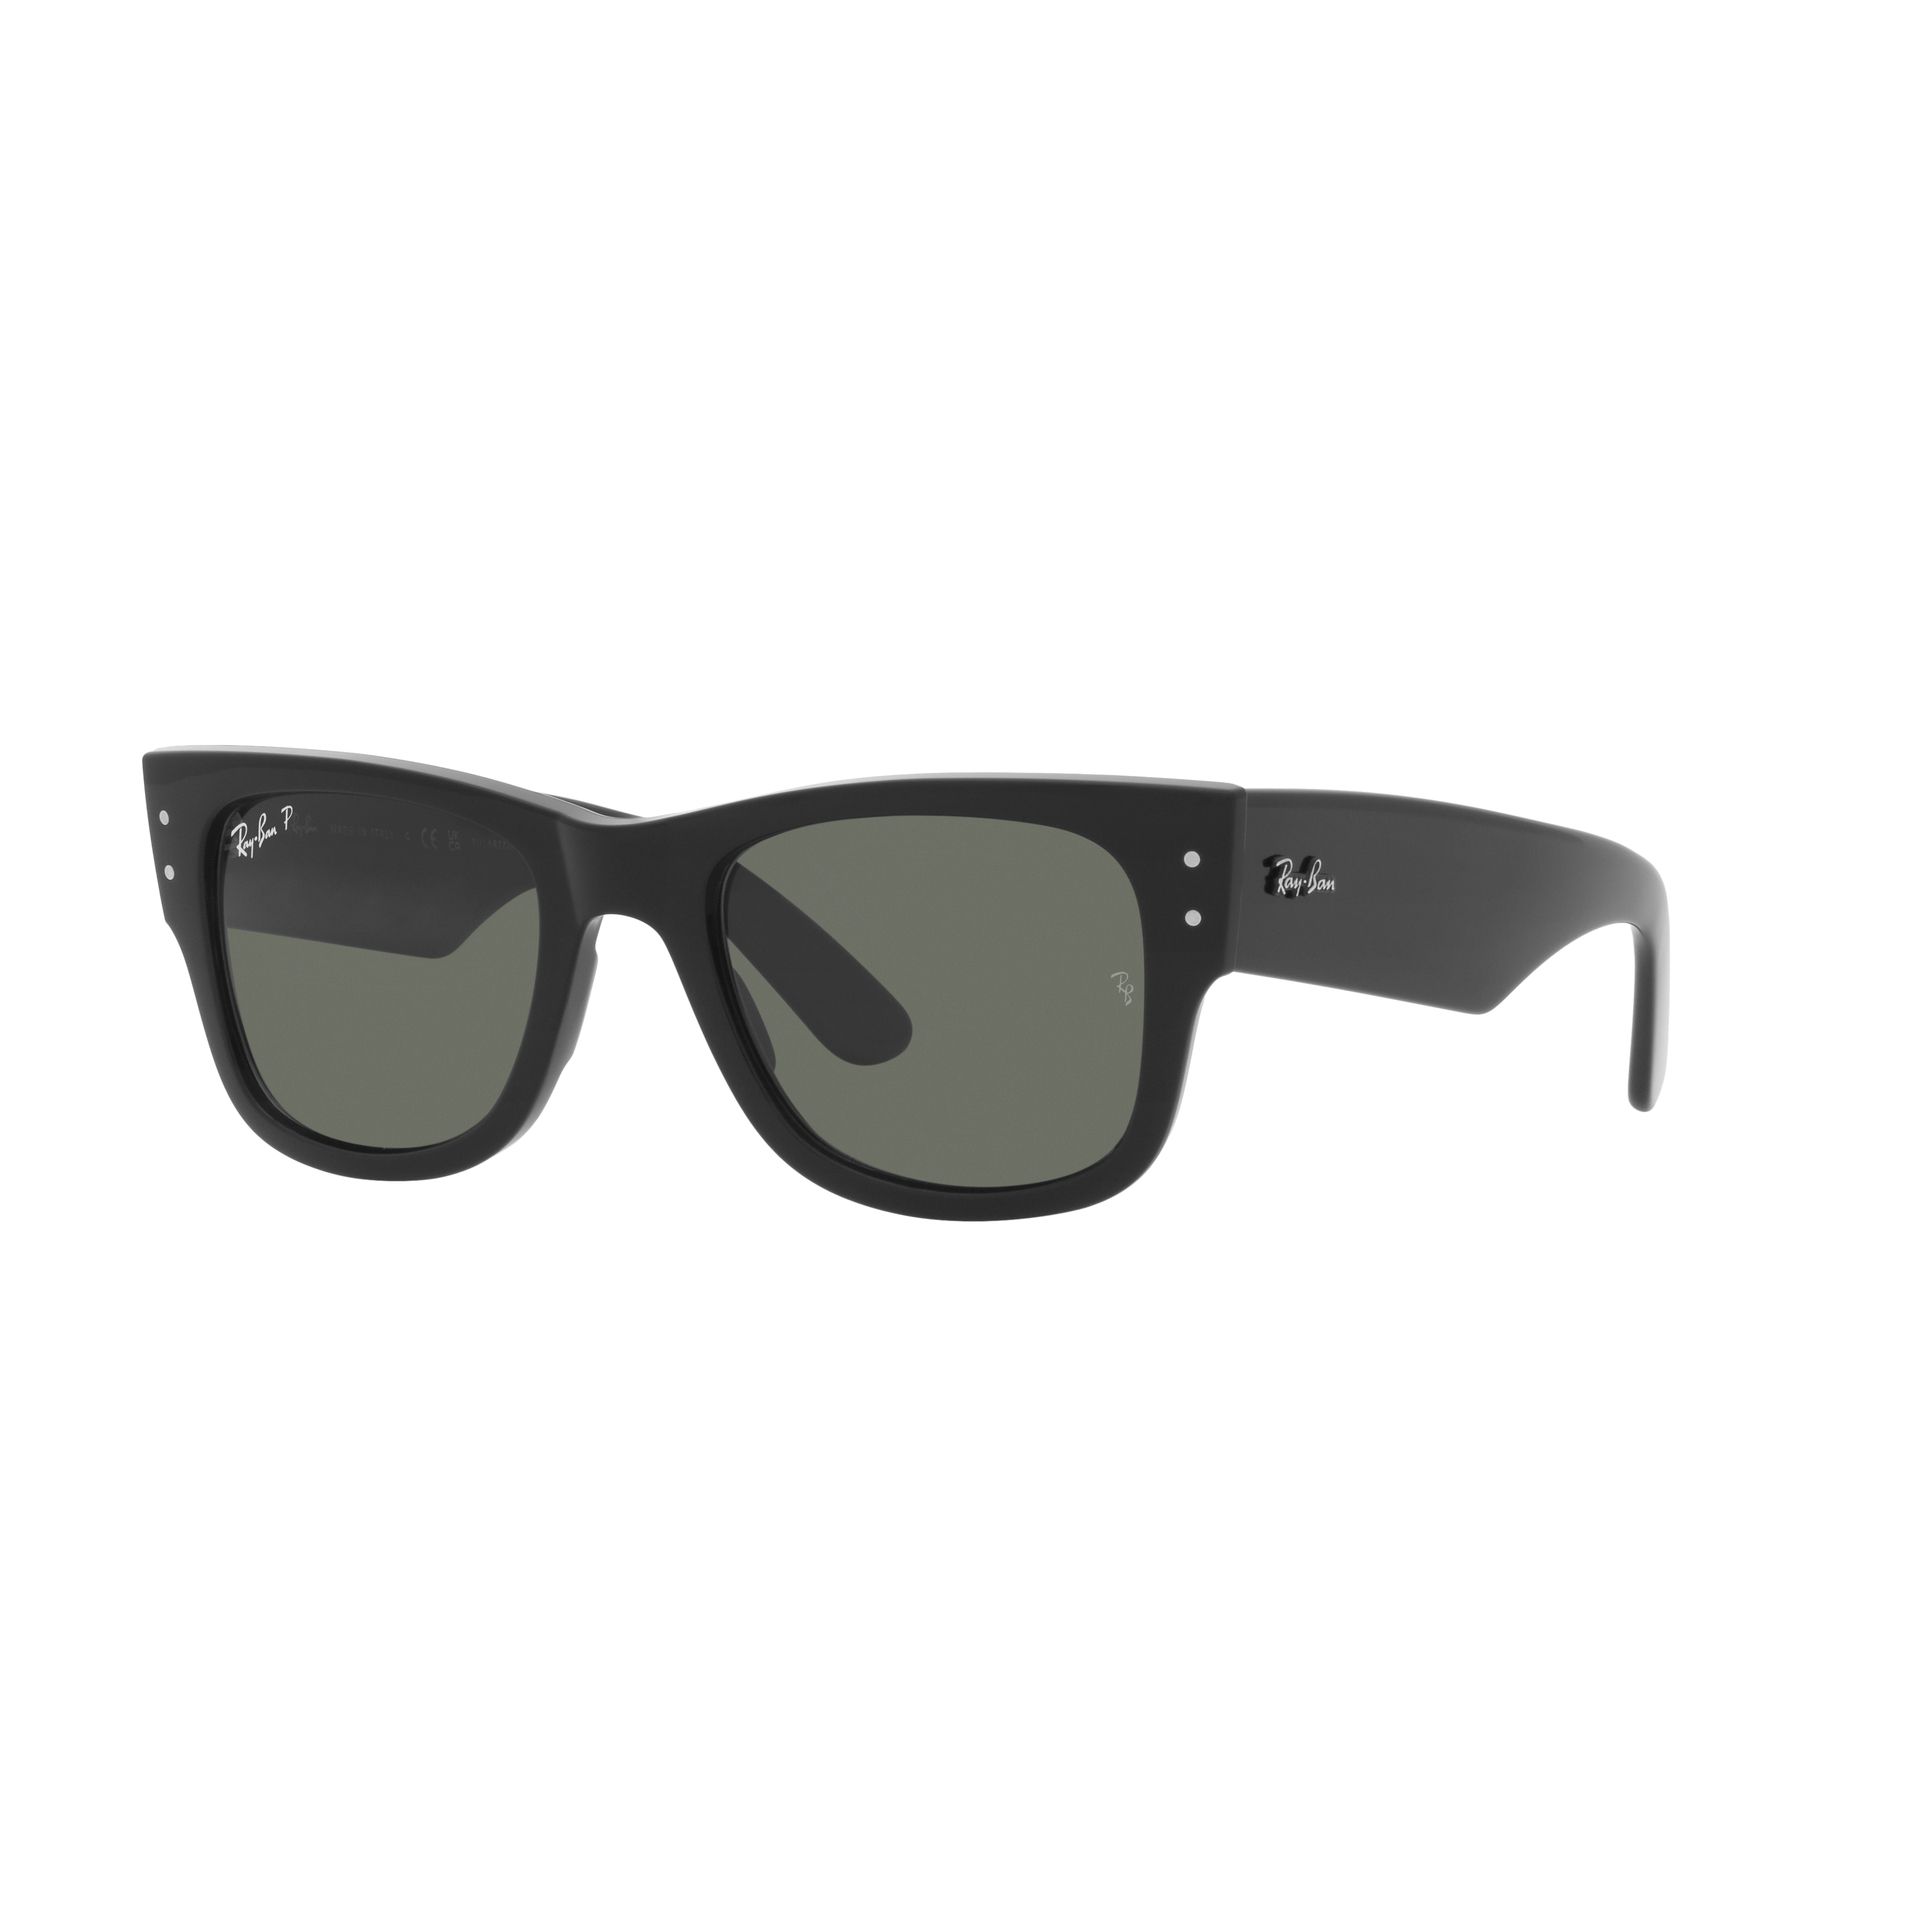 0RB0840S Square Sunglasses 901 58 - size 51